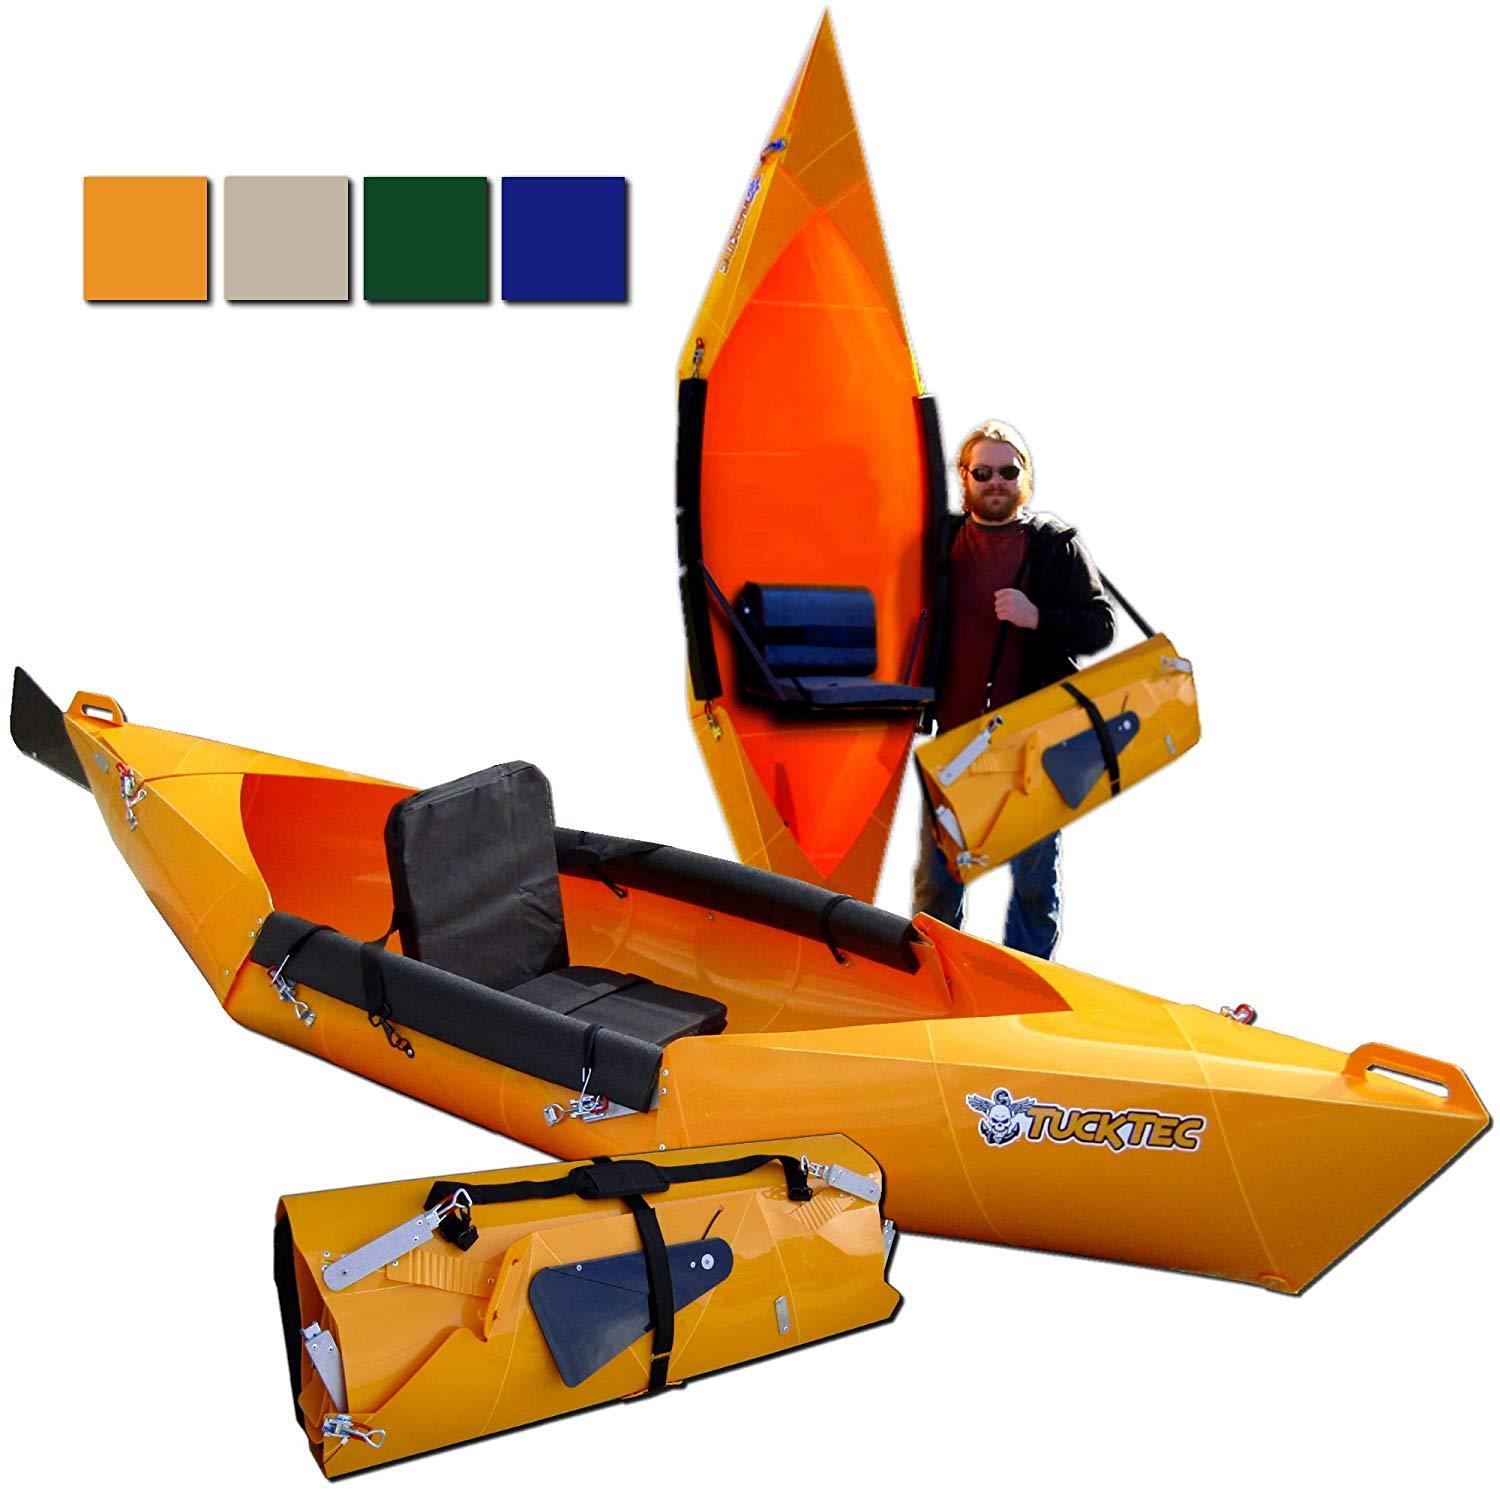 Tucktec, Tucktec Advanced 2020 Model 10 Ft Foldable Kayak Portable Lightweight Canoe Dark Yellow New